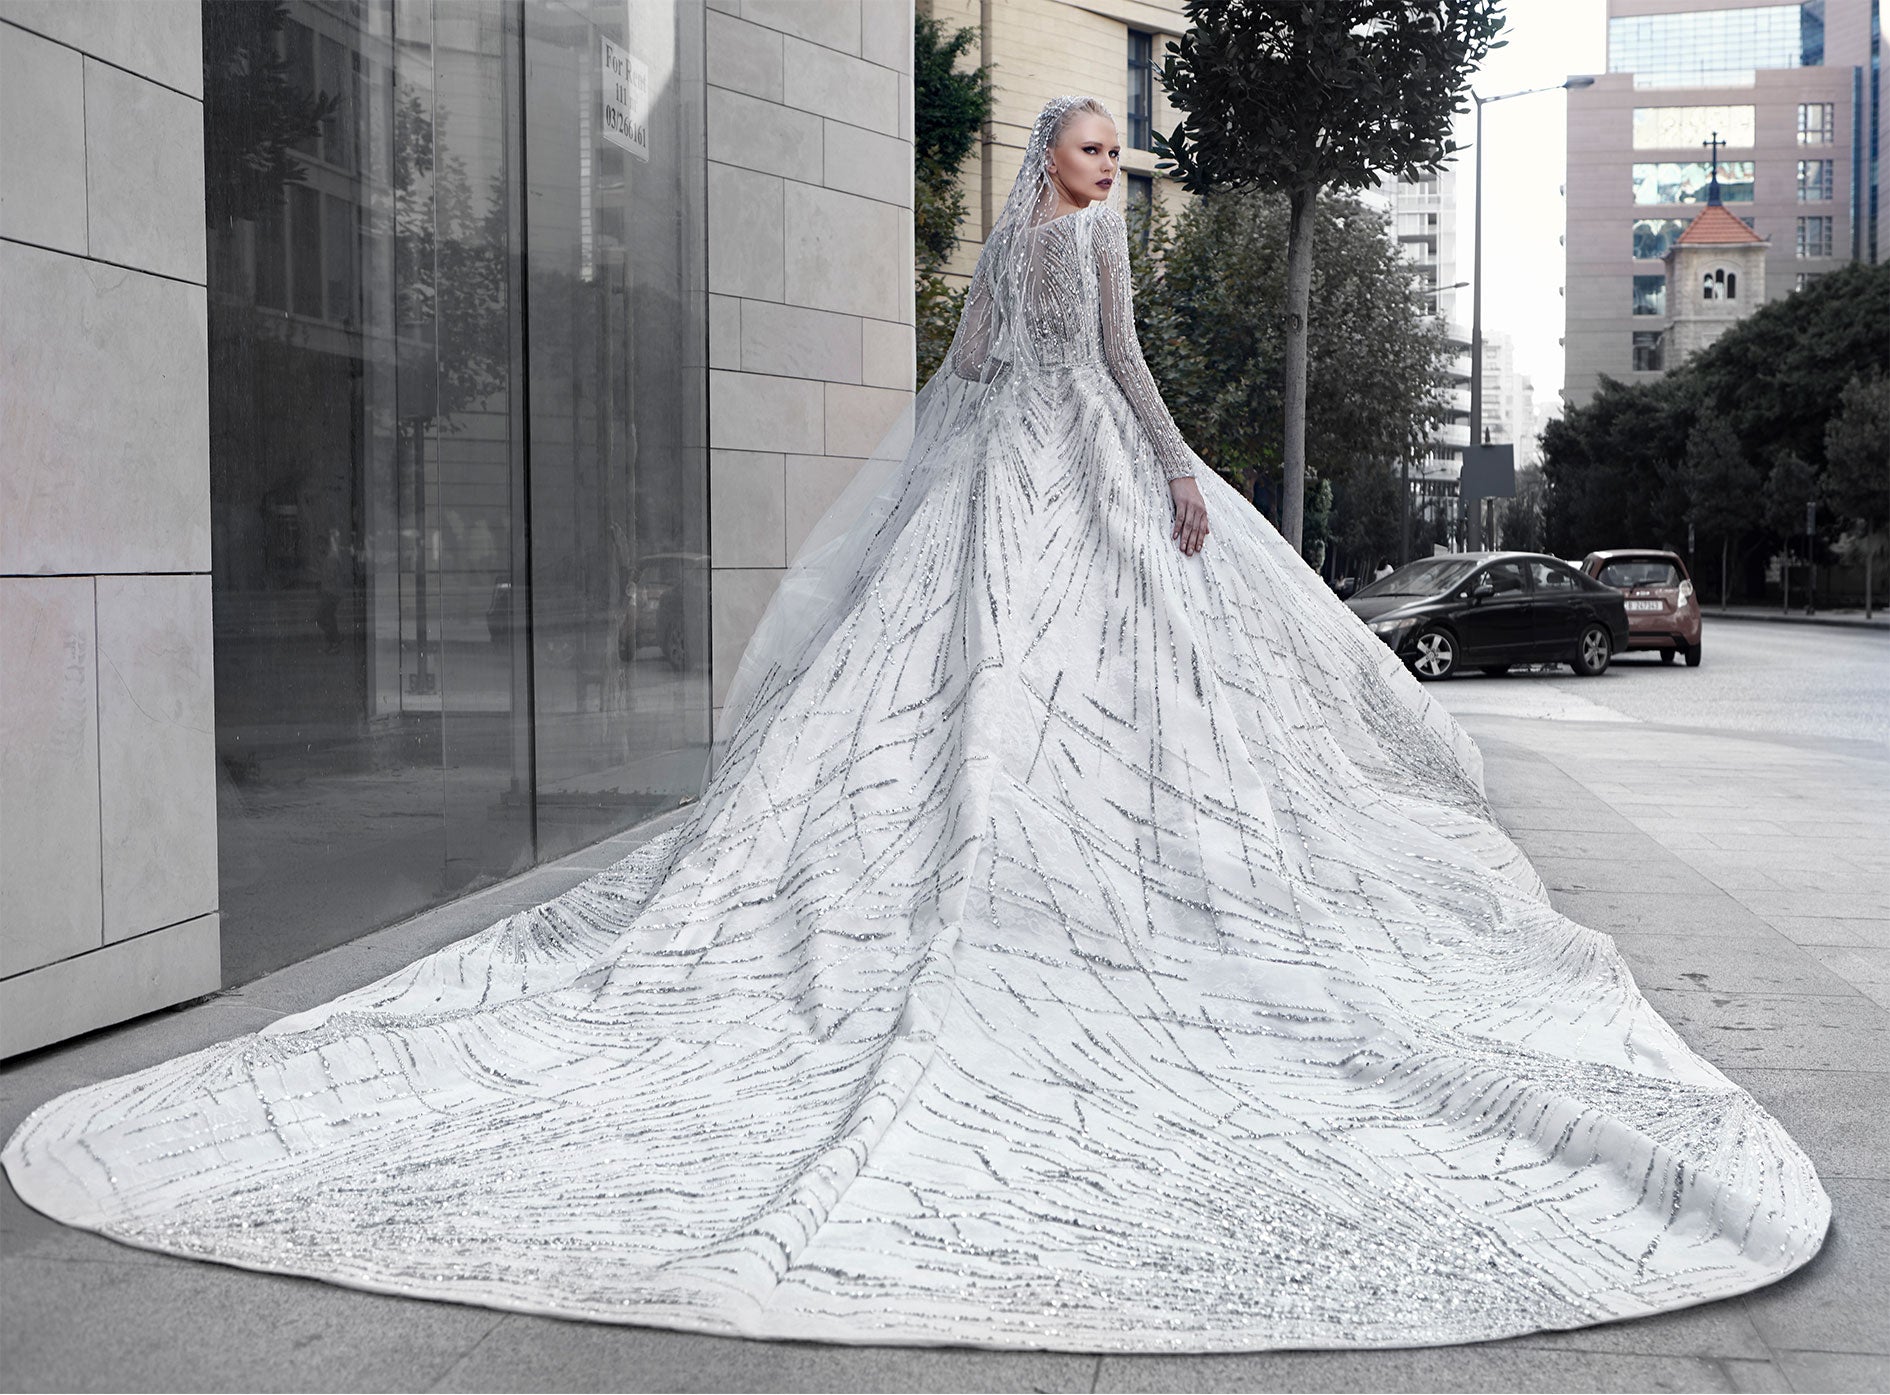 Royal Patterned Bridal Dress